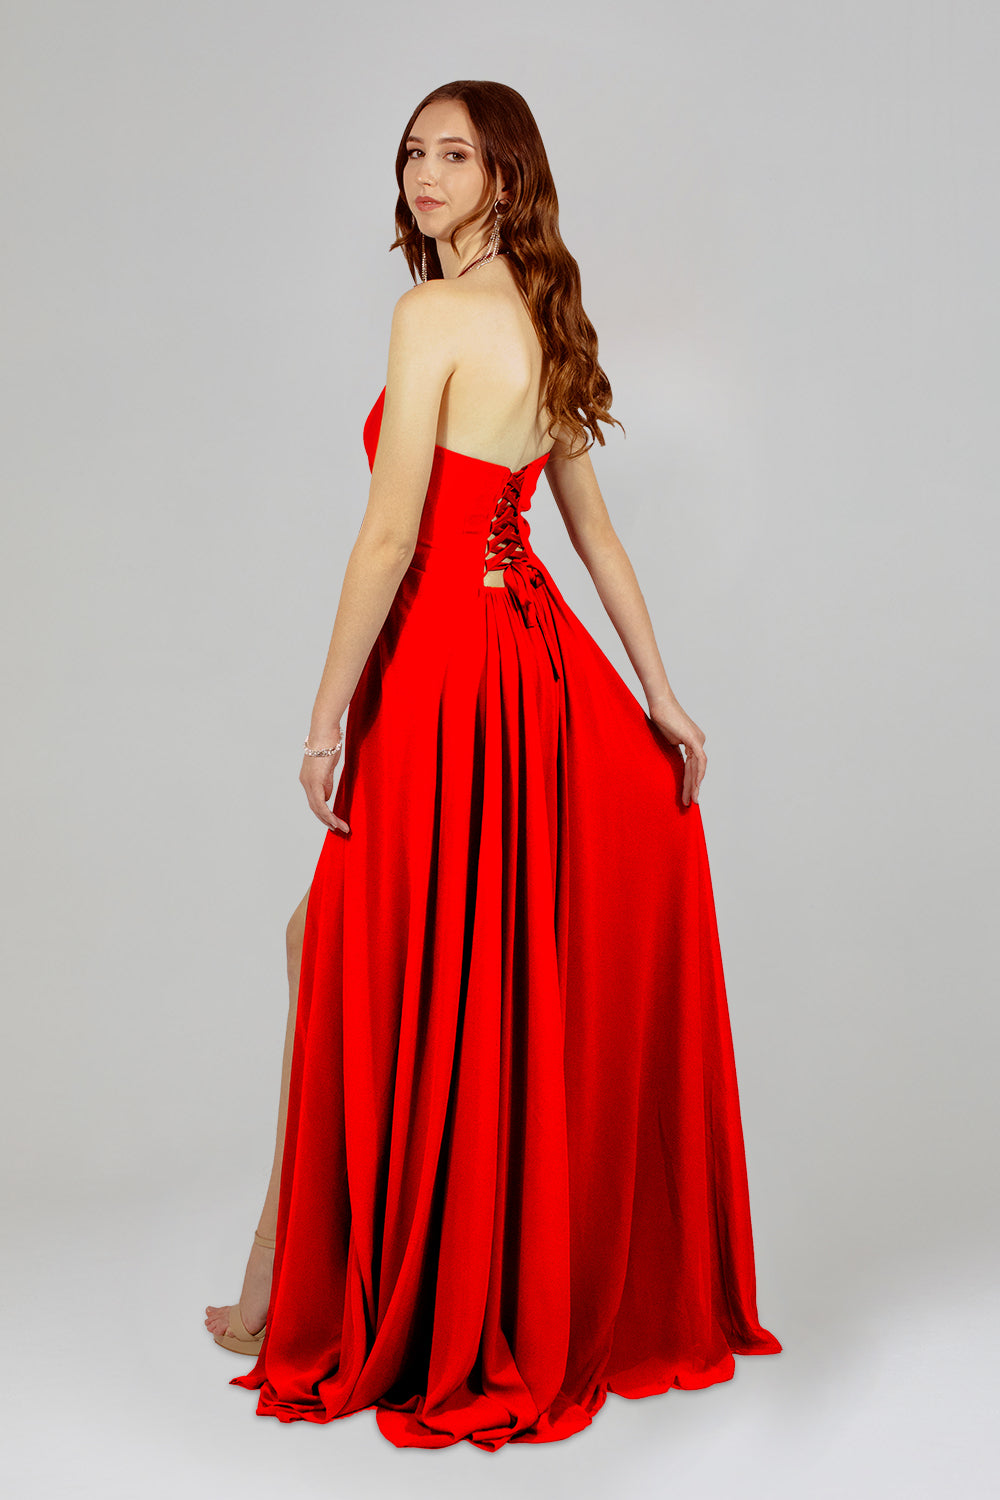 red bridesmaid dresses custom sizes australia online envious bridal & formal